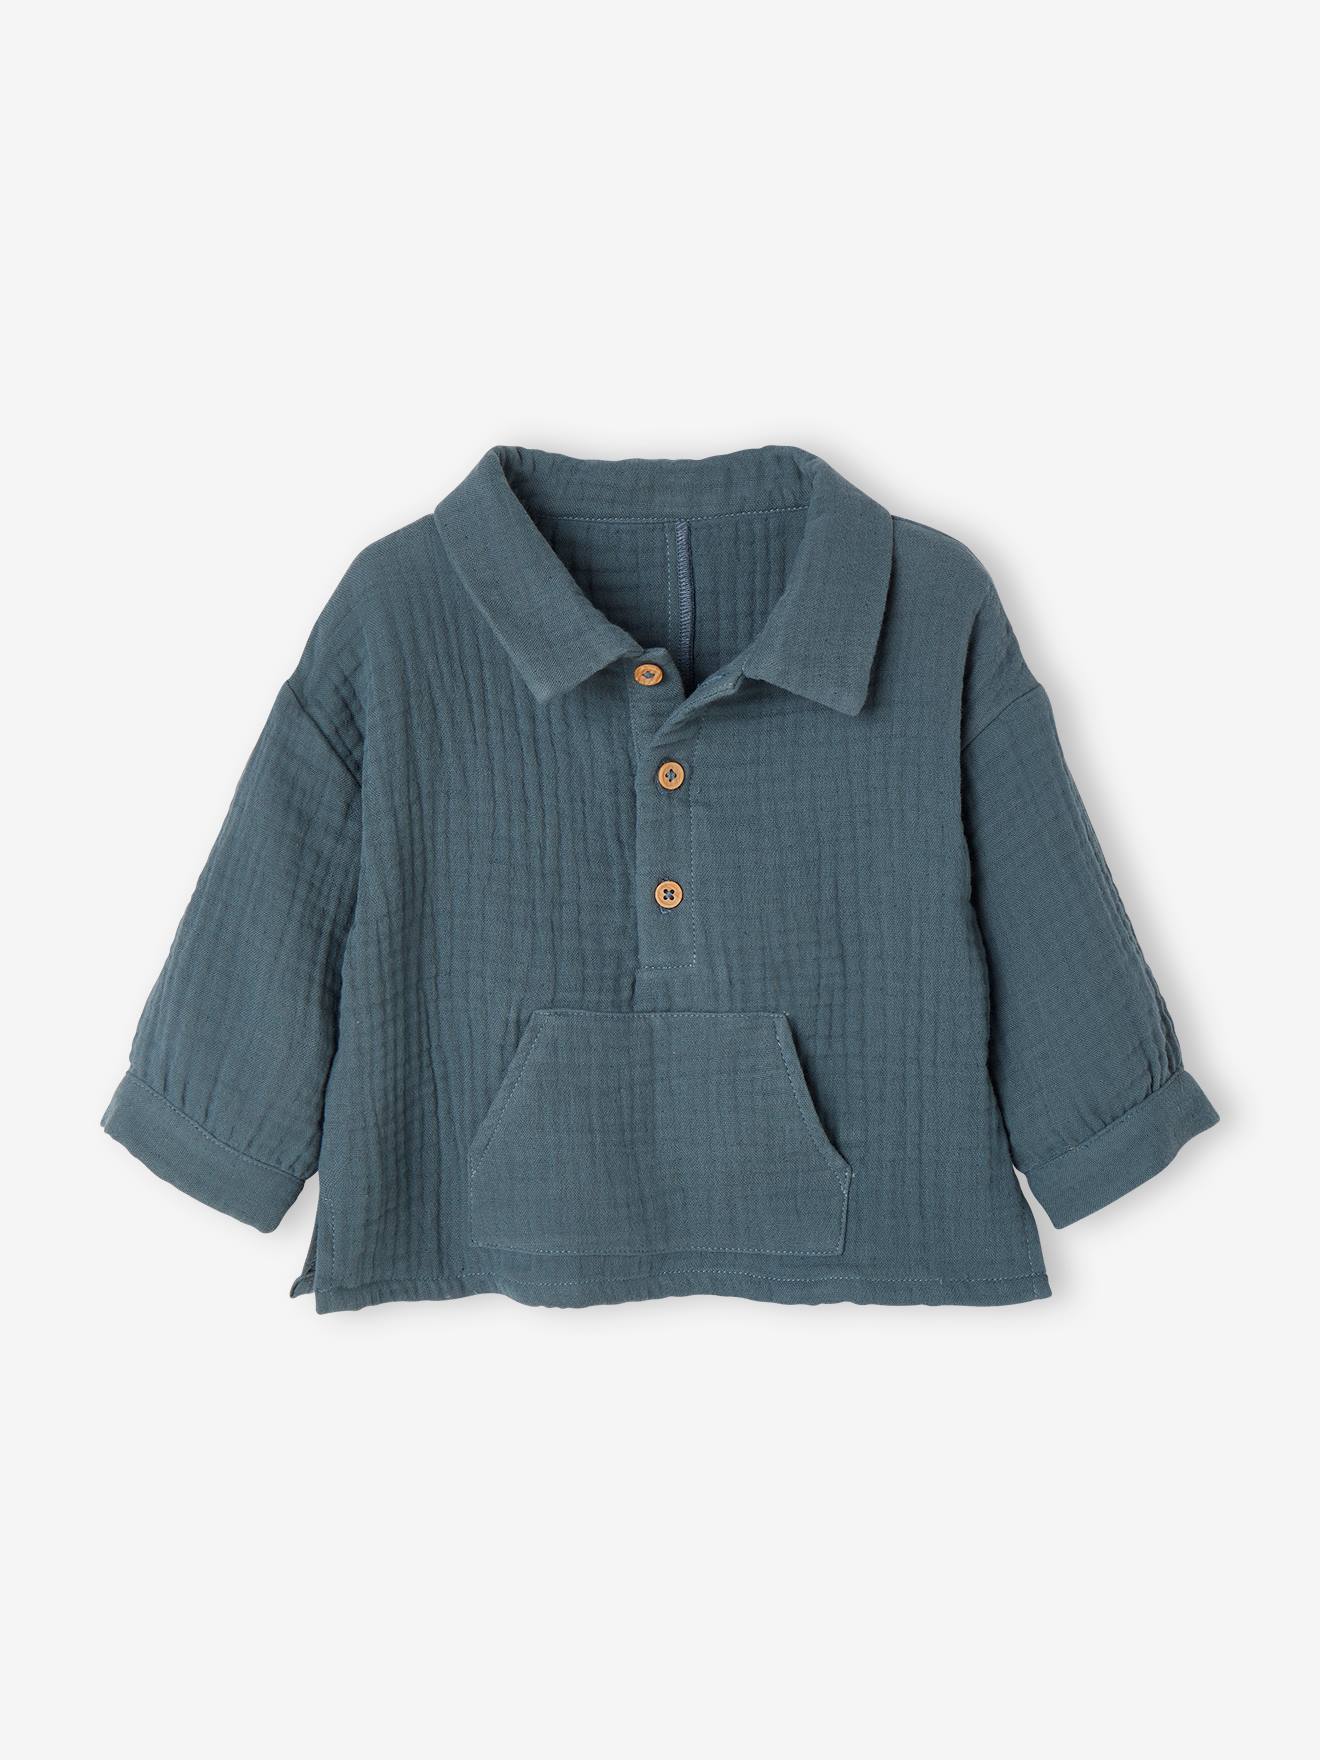 Vareuse blouse voor baby's van katoengaas leiblauw